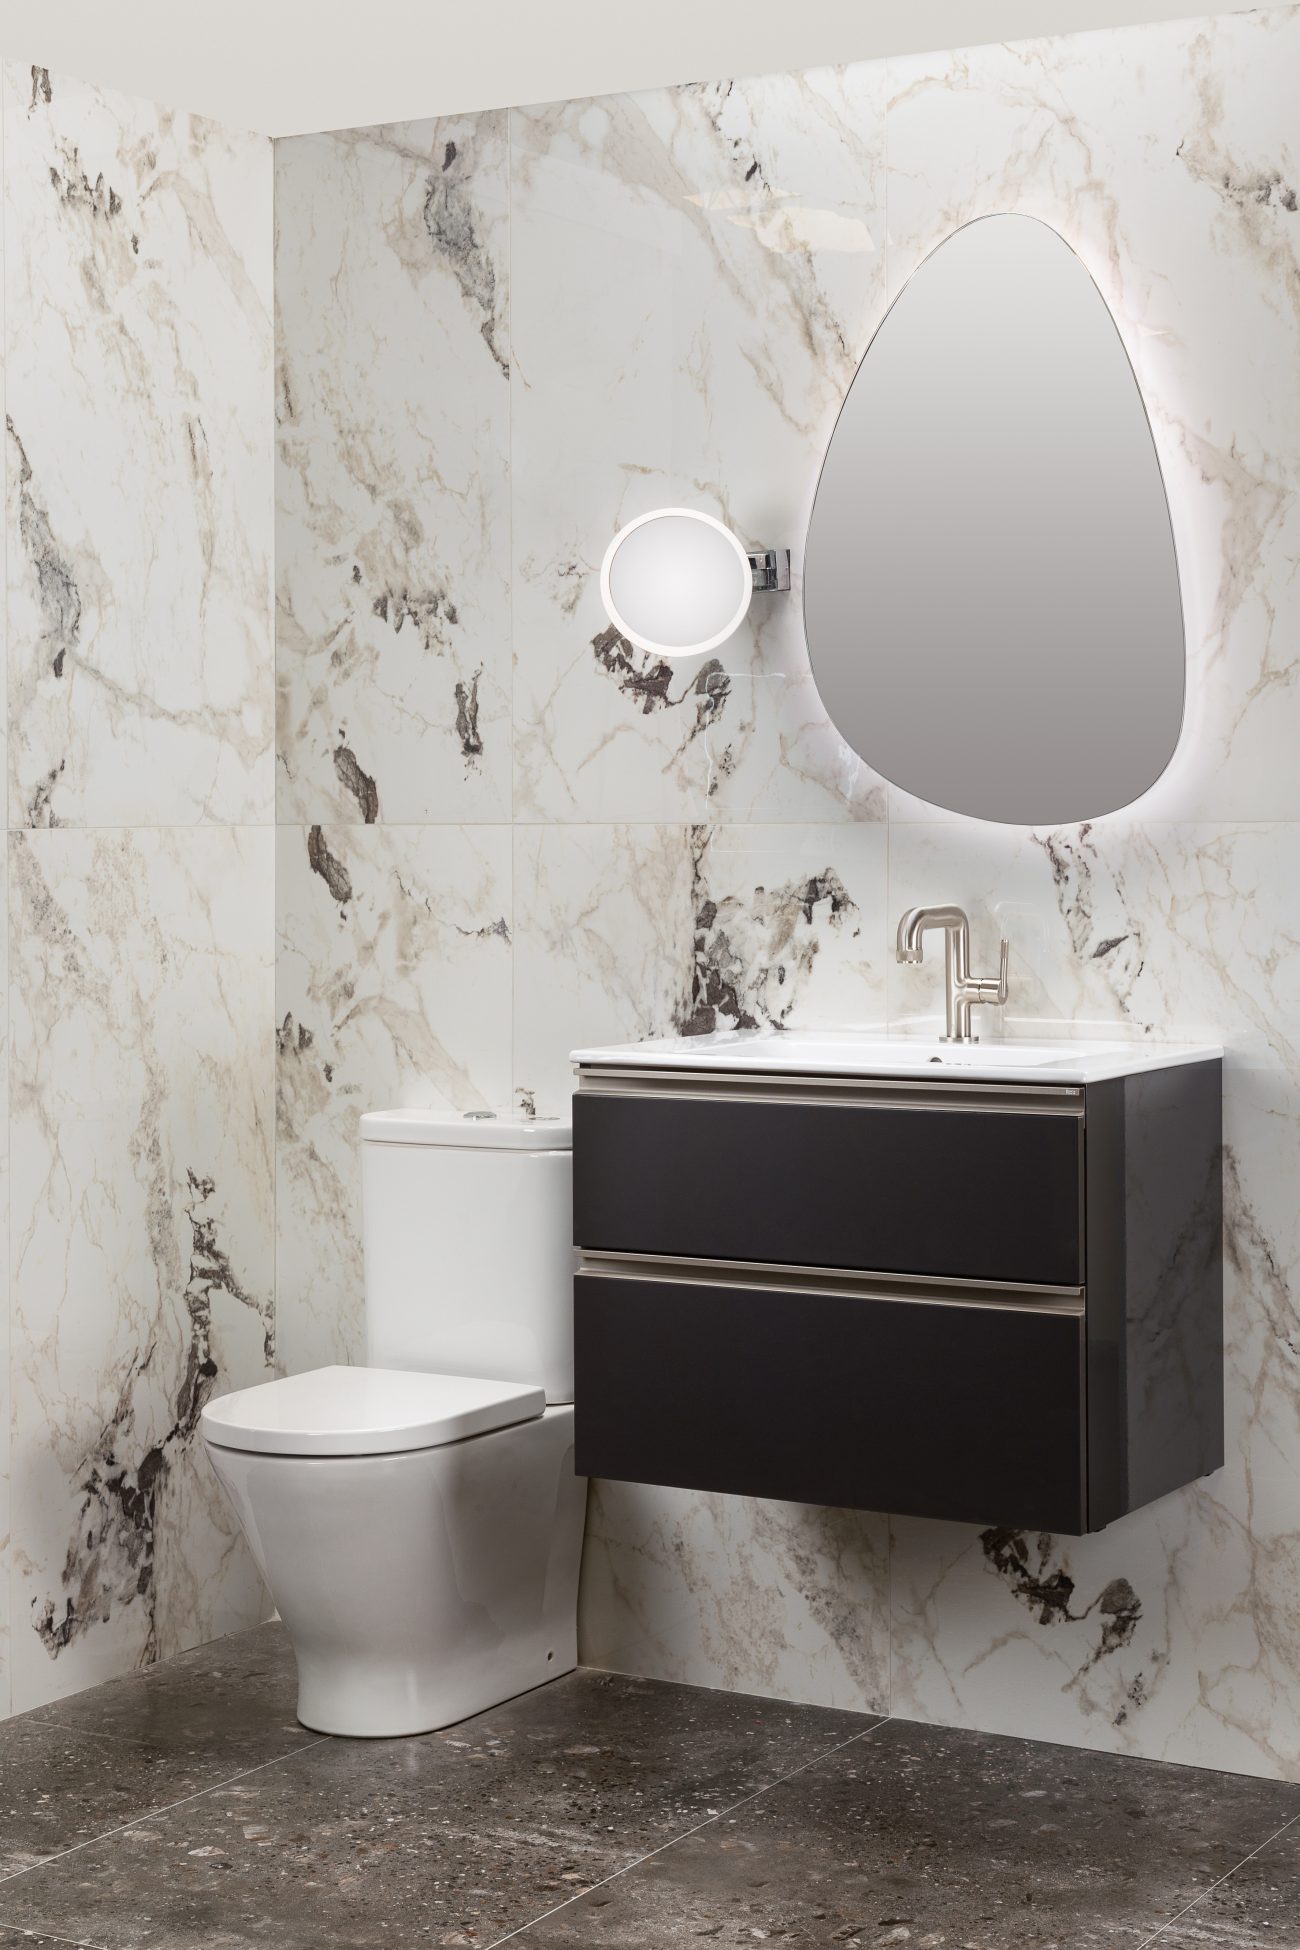 Oval mirror with light frame on an elegant bathroom wall